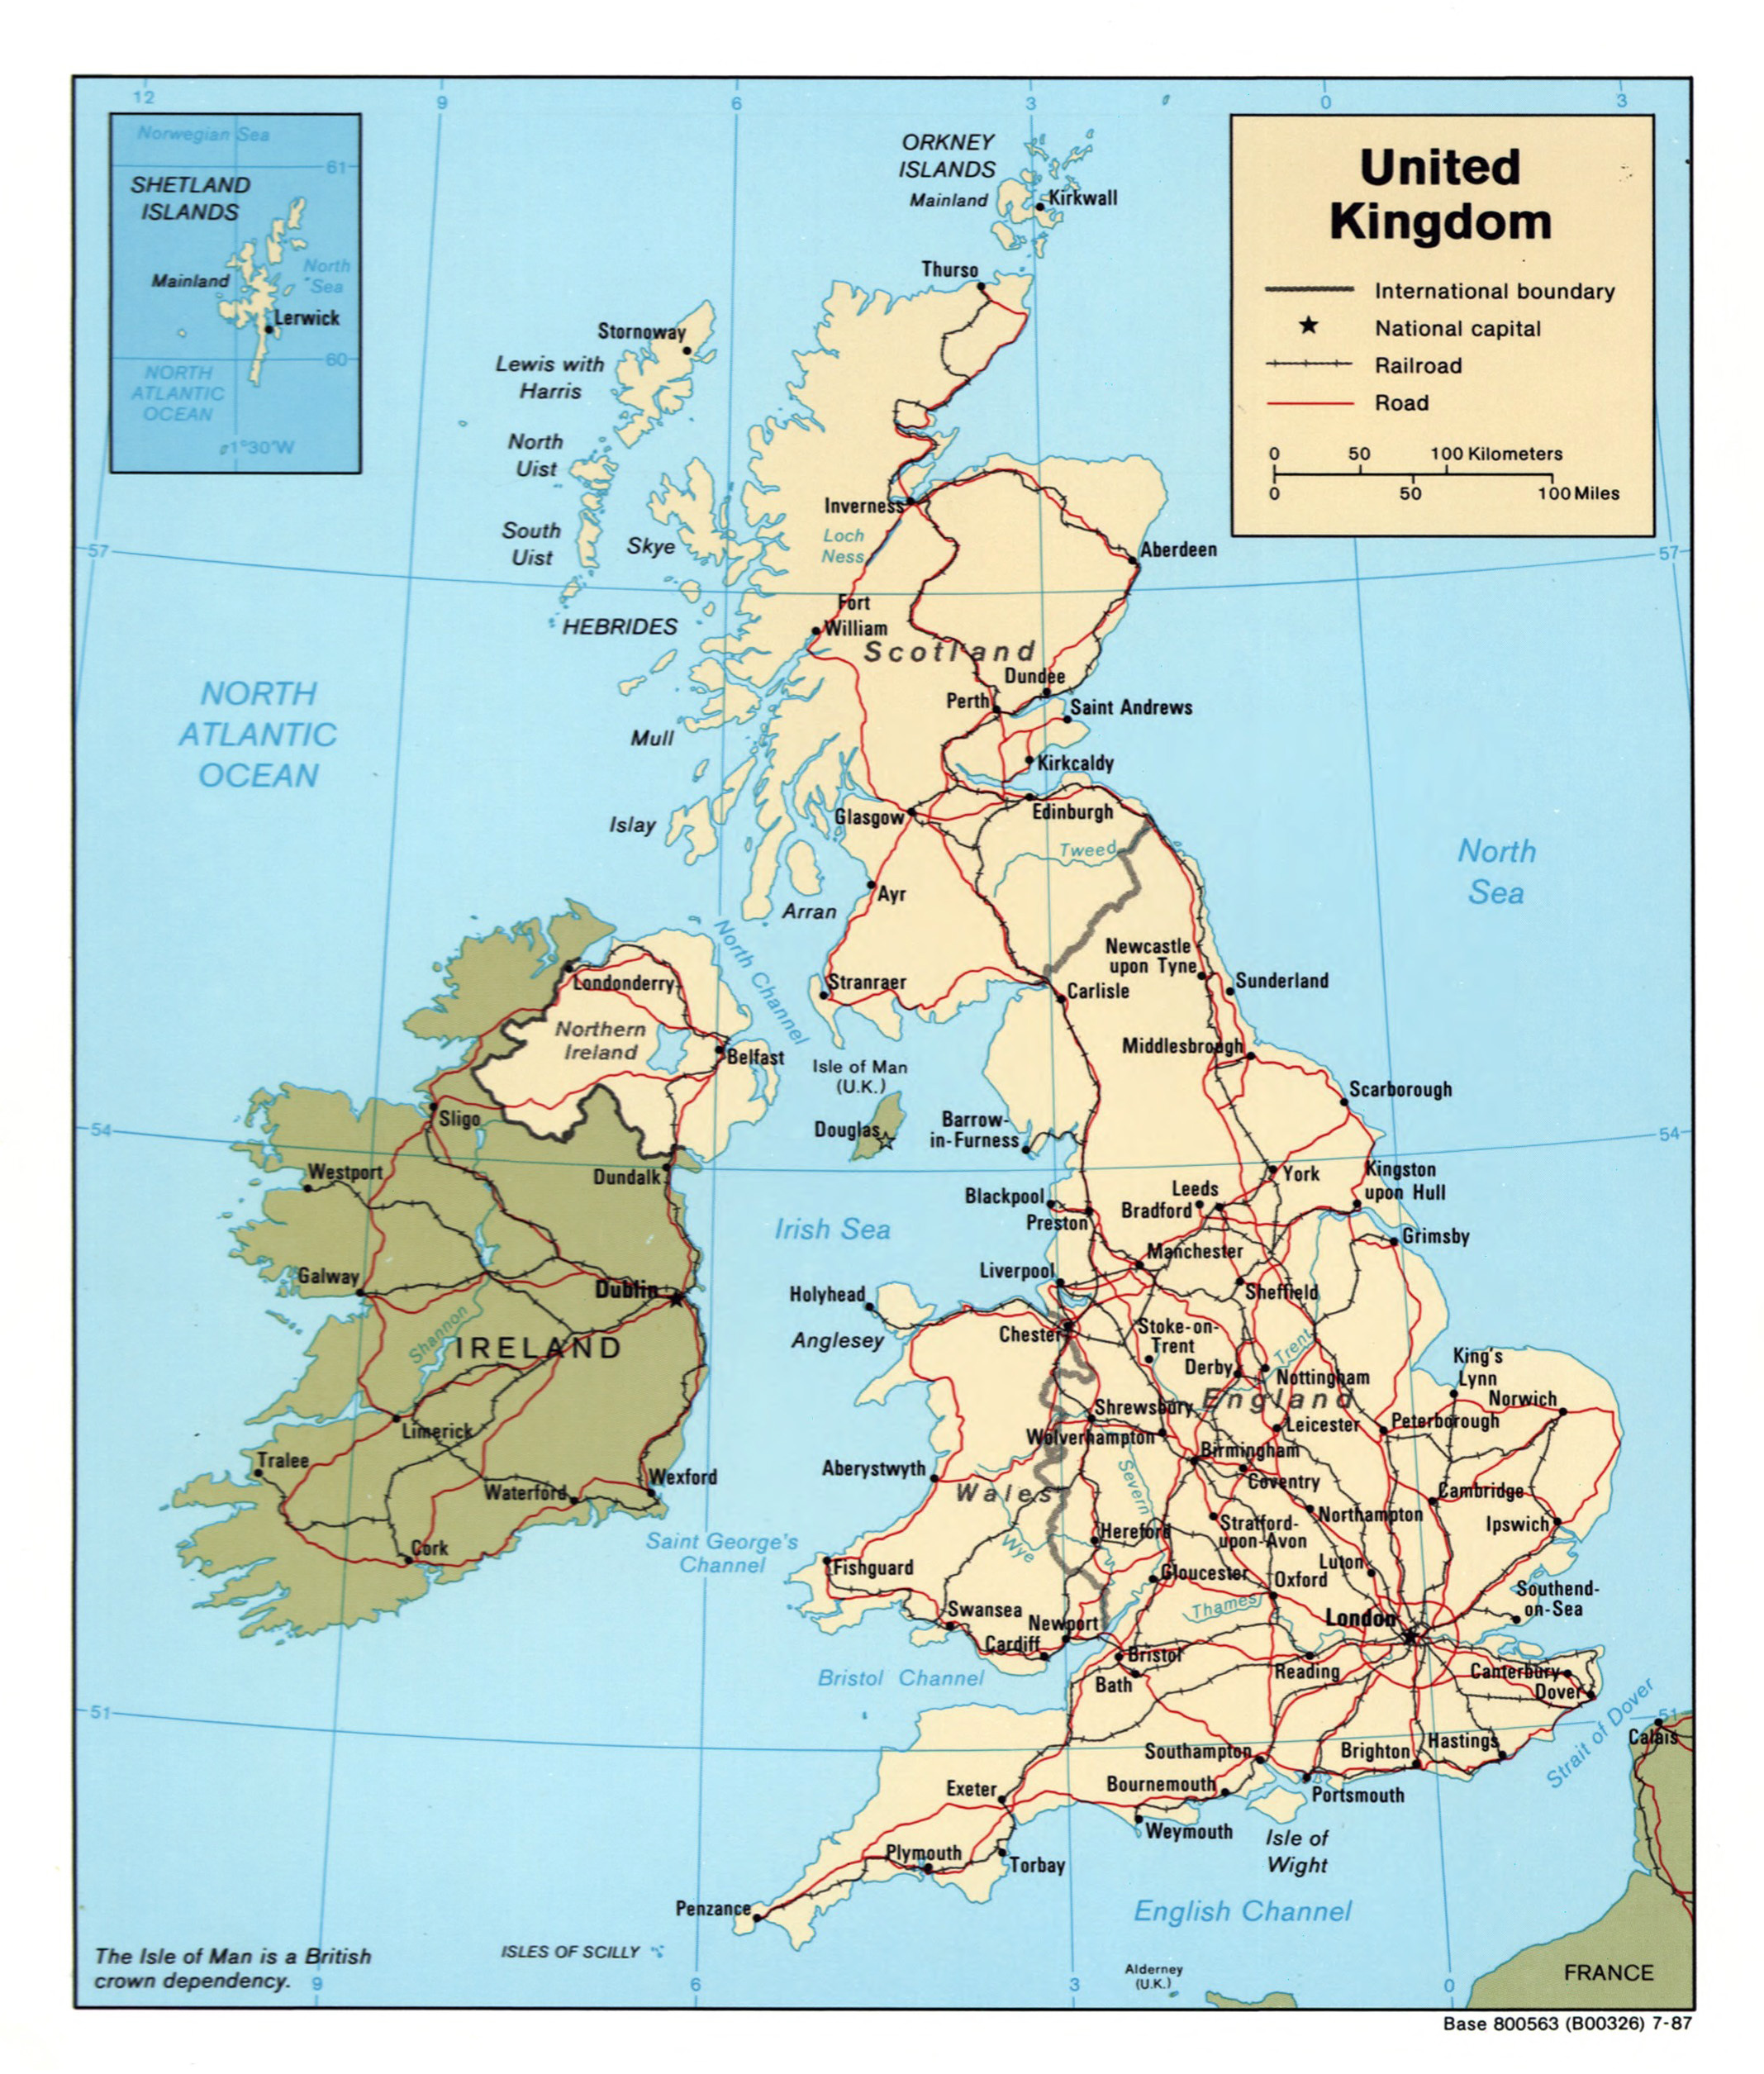 united-kingdom-capital-map